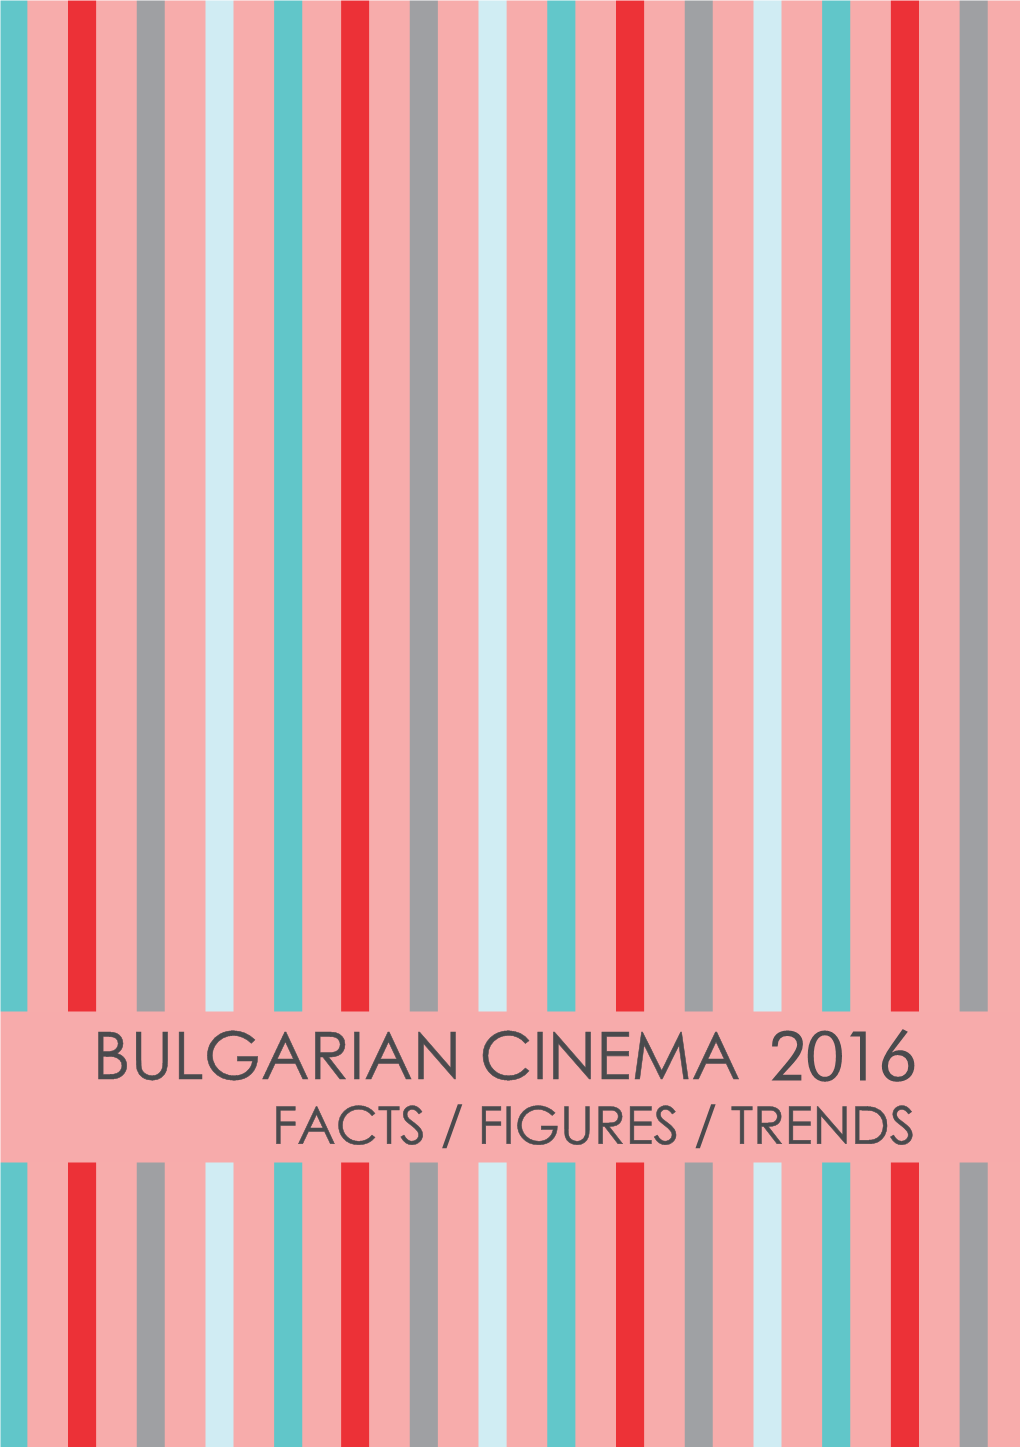 Bulgarian Cinema 2016 Facts / Figures / Trends Editorial